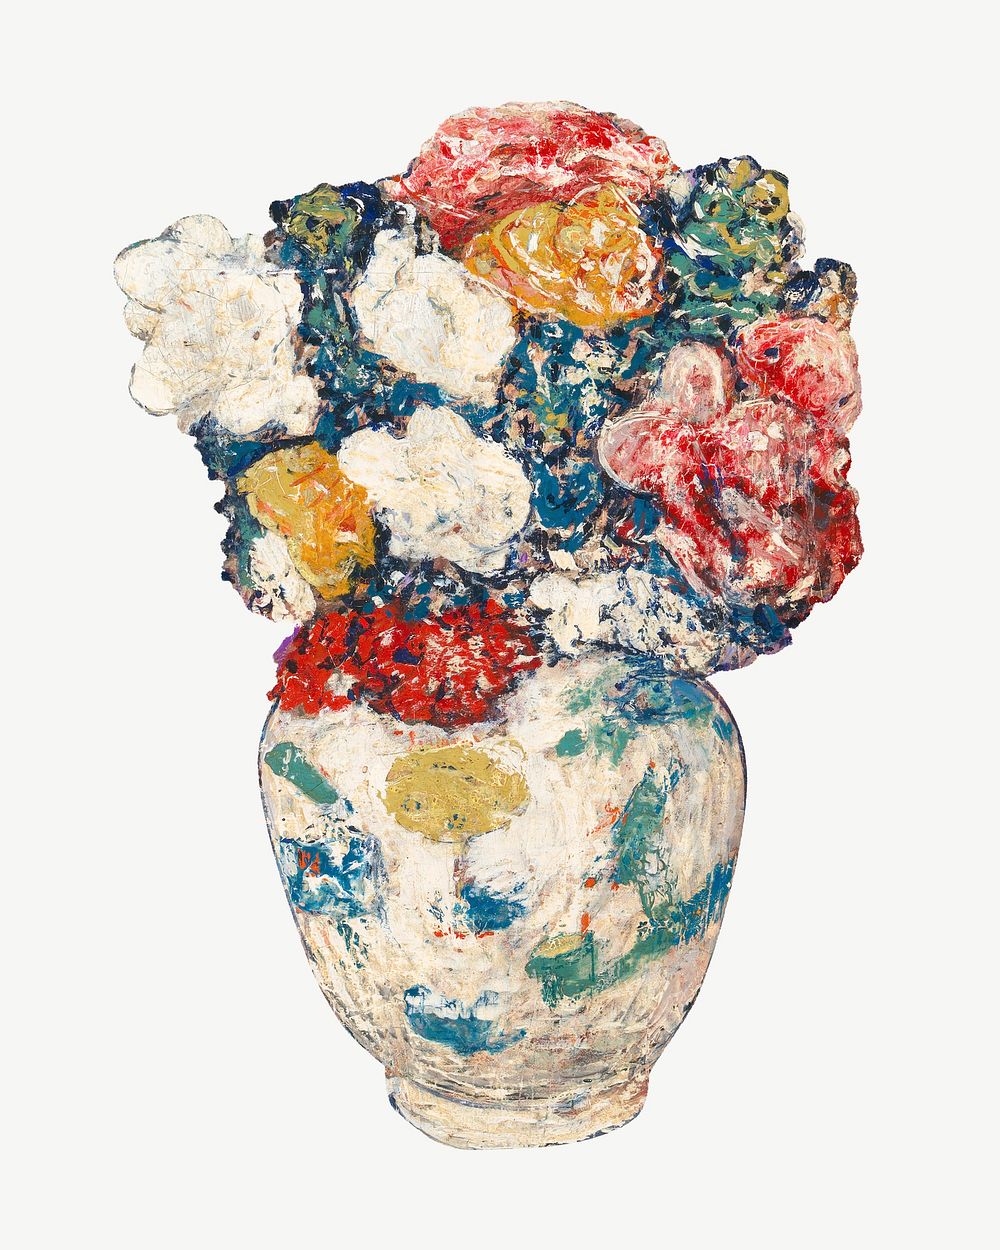 Vintage flower vase, botanical illustration by Henry Golden Dearth. Remixed by rawpixel.